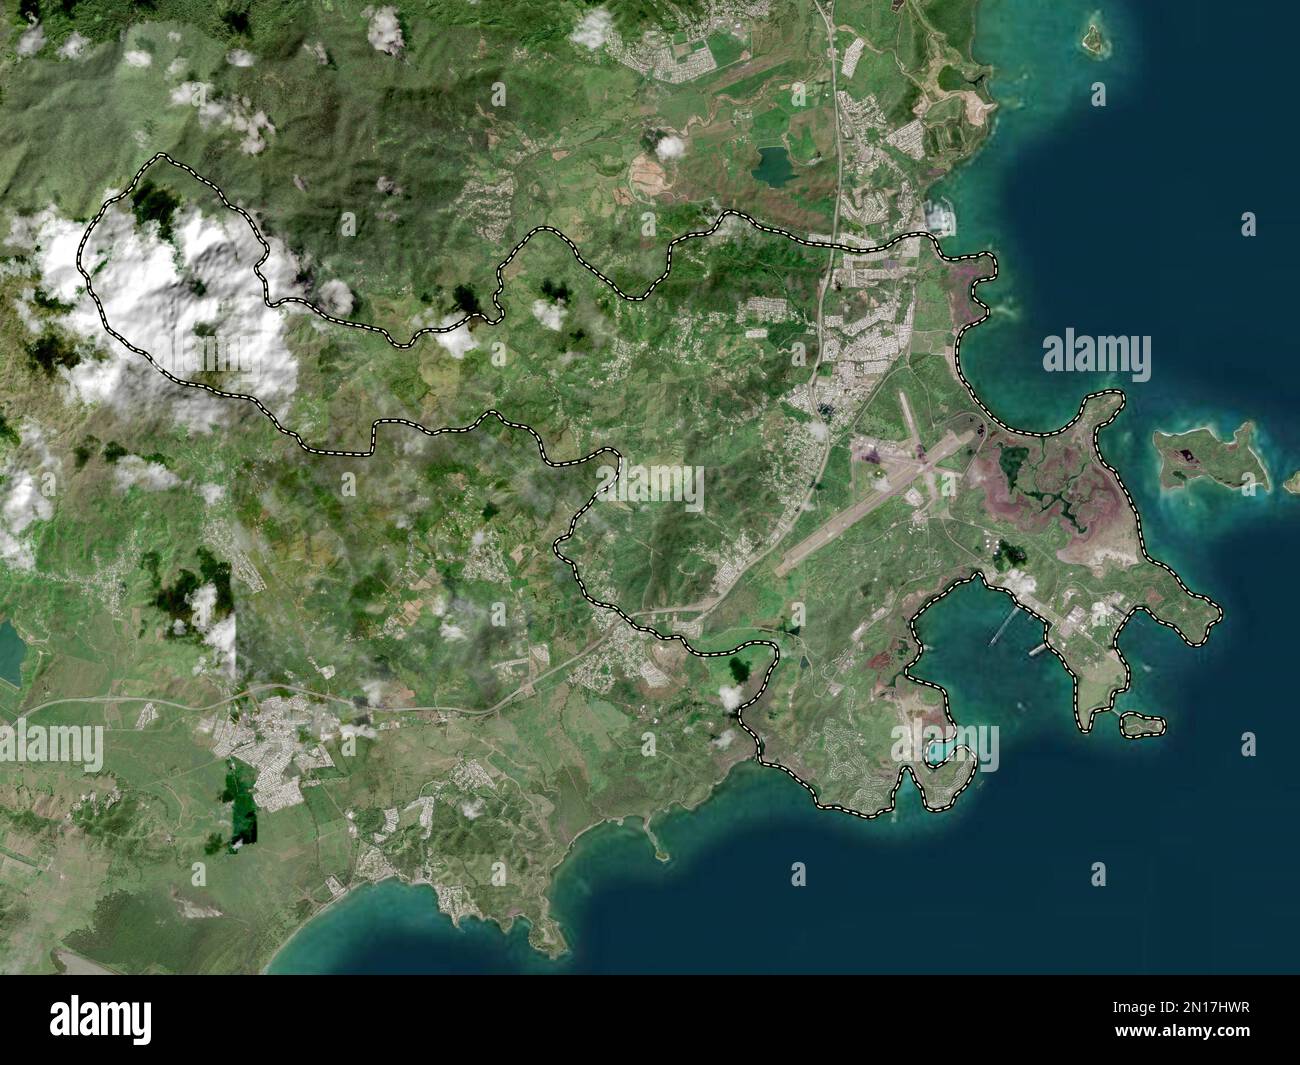 Ceiba, municipality of Puerto Rico. High resolution satellite map Stock Photo